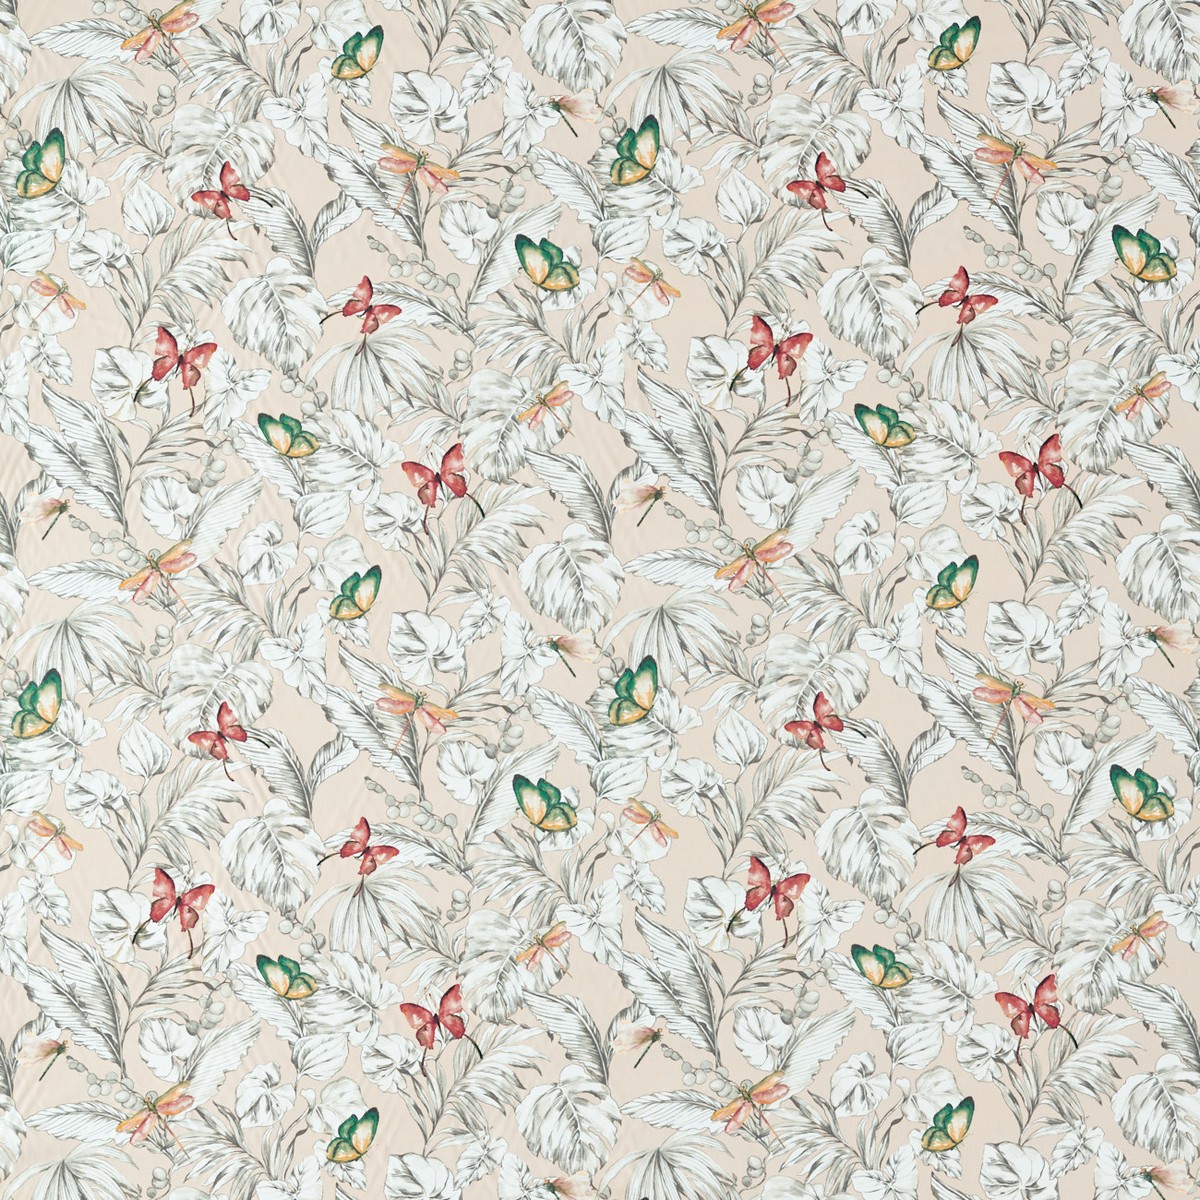 Acadia Blush Fabric by Studio G